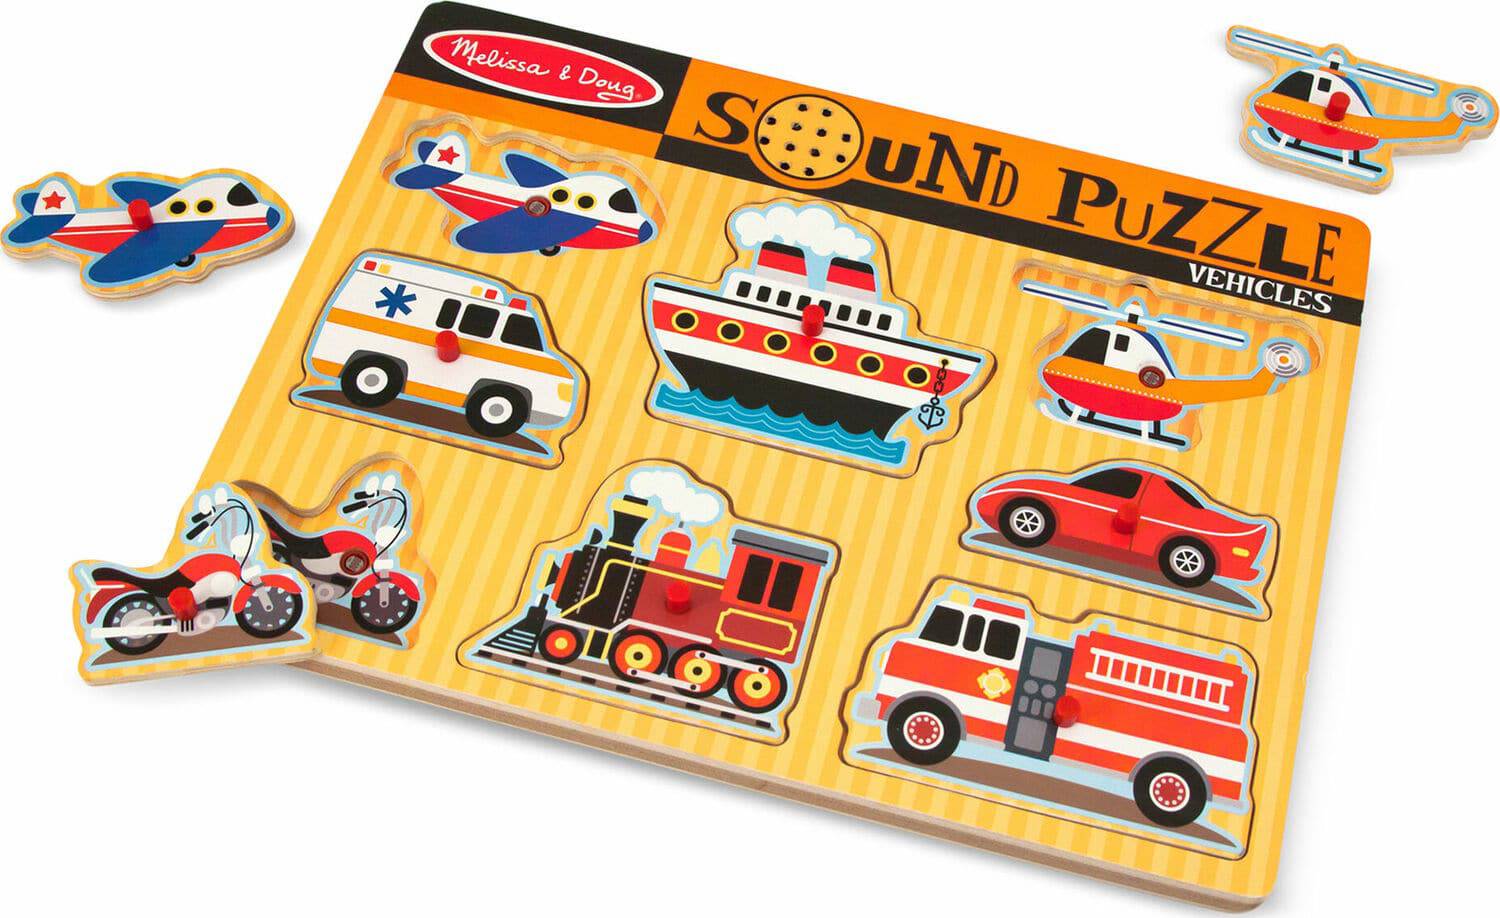 725 SOUND PUZZLE VEHICLES - A Child's Delight